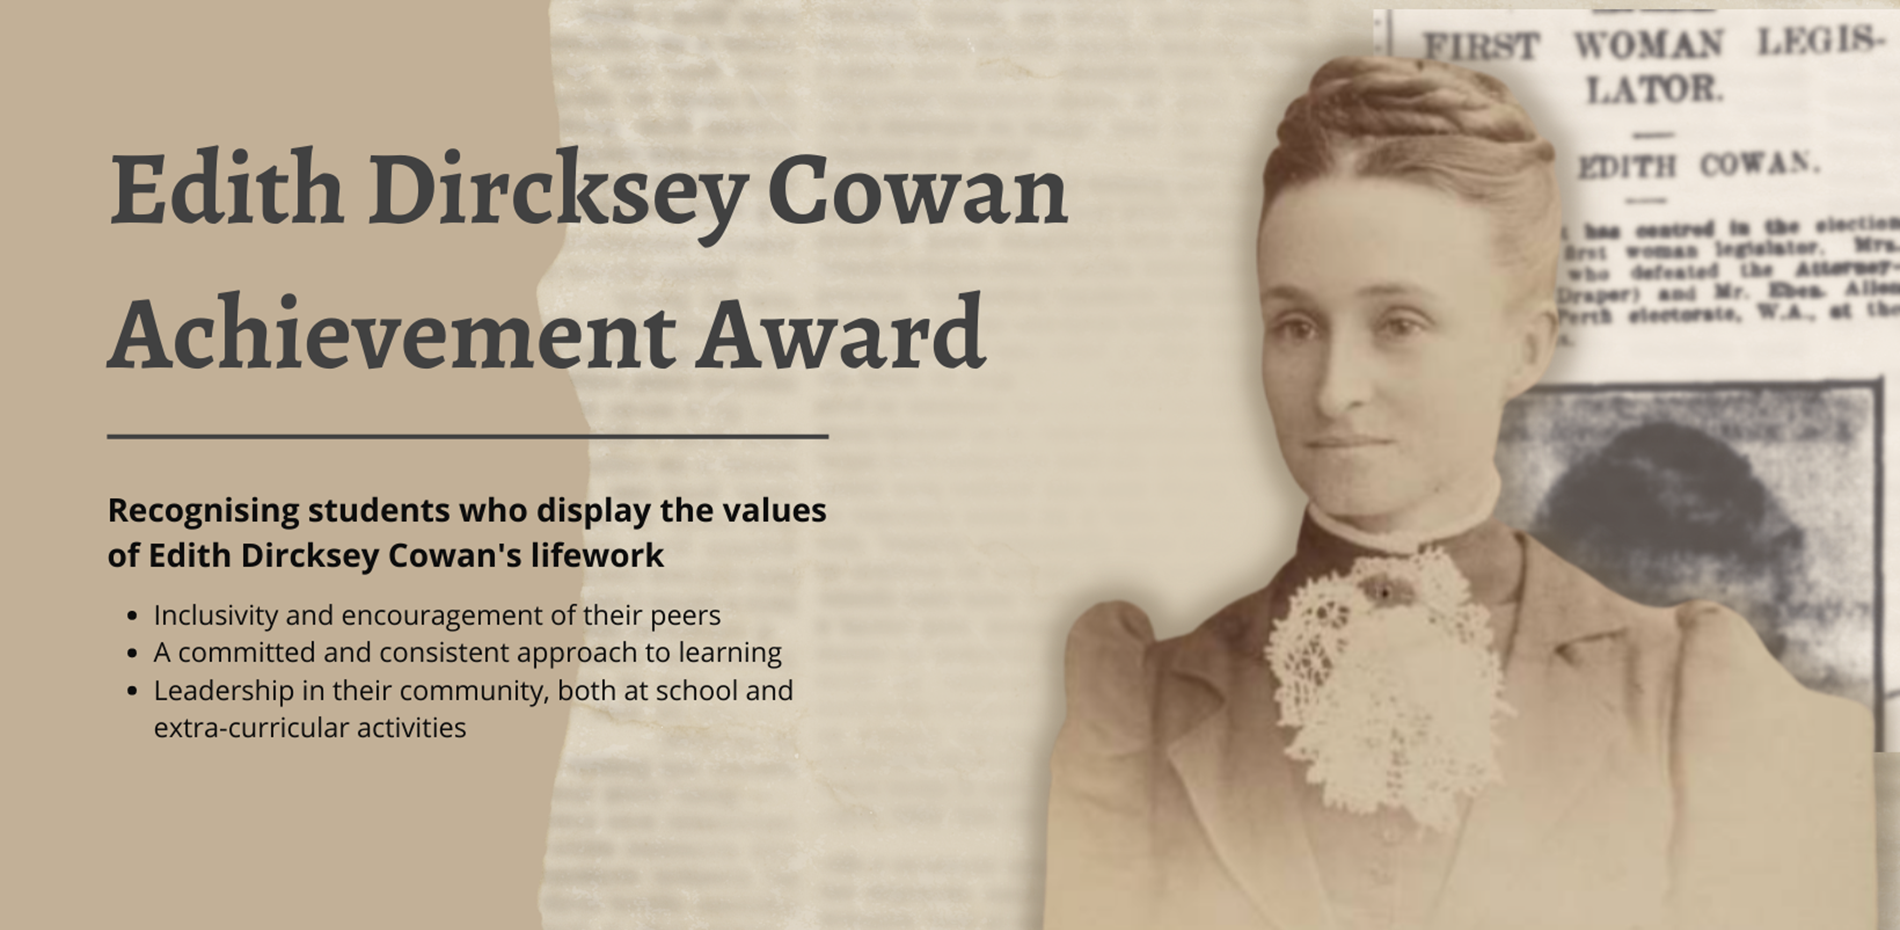 The Edith Dircksey Cowan Achievement Award Main Image